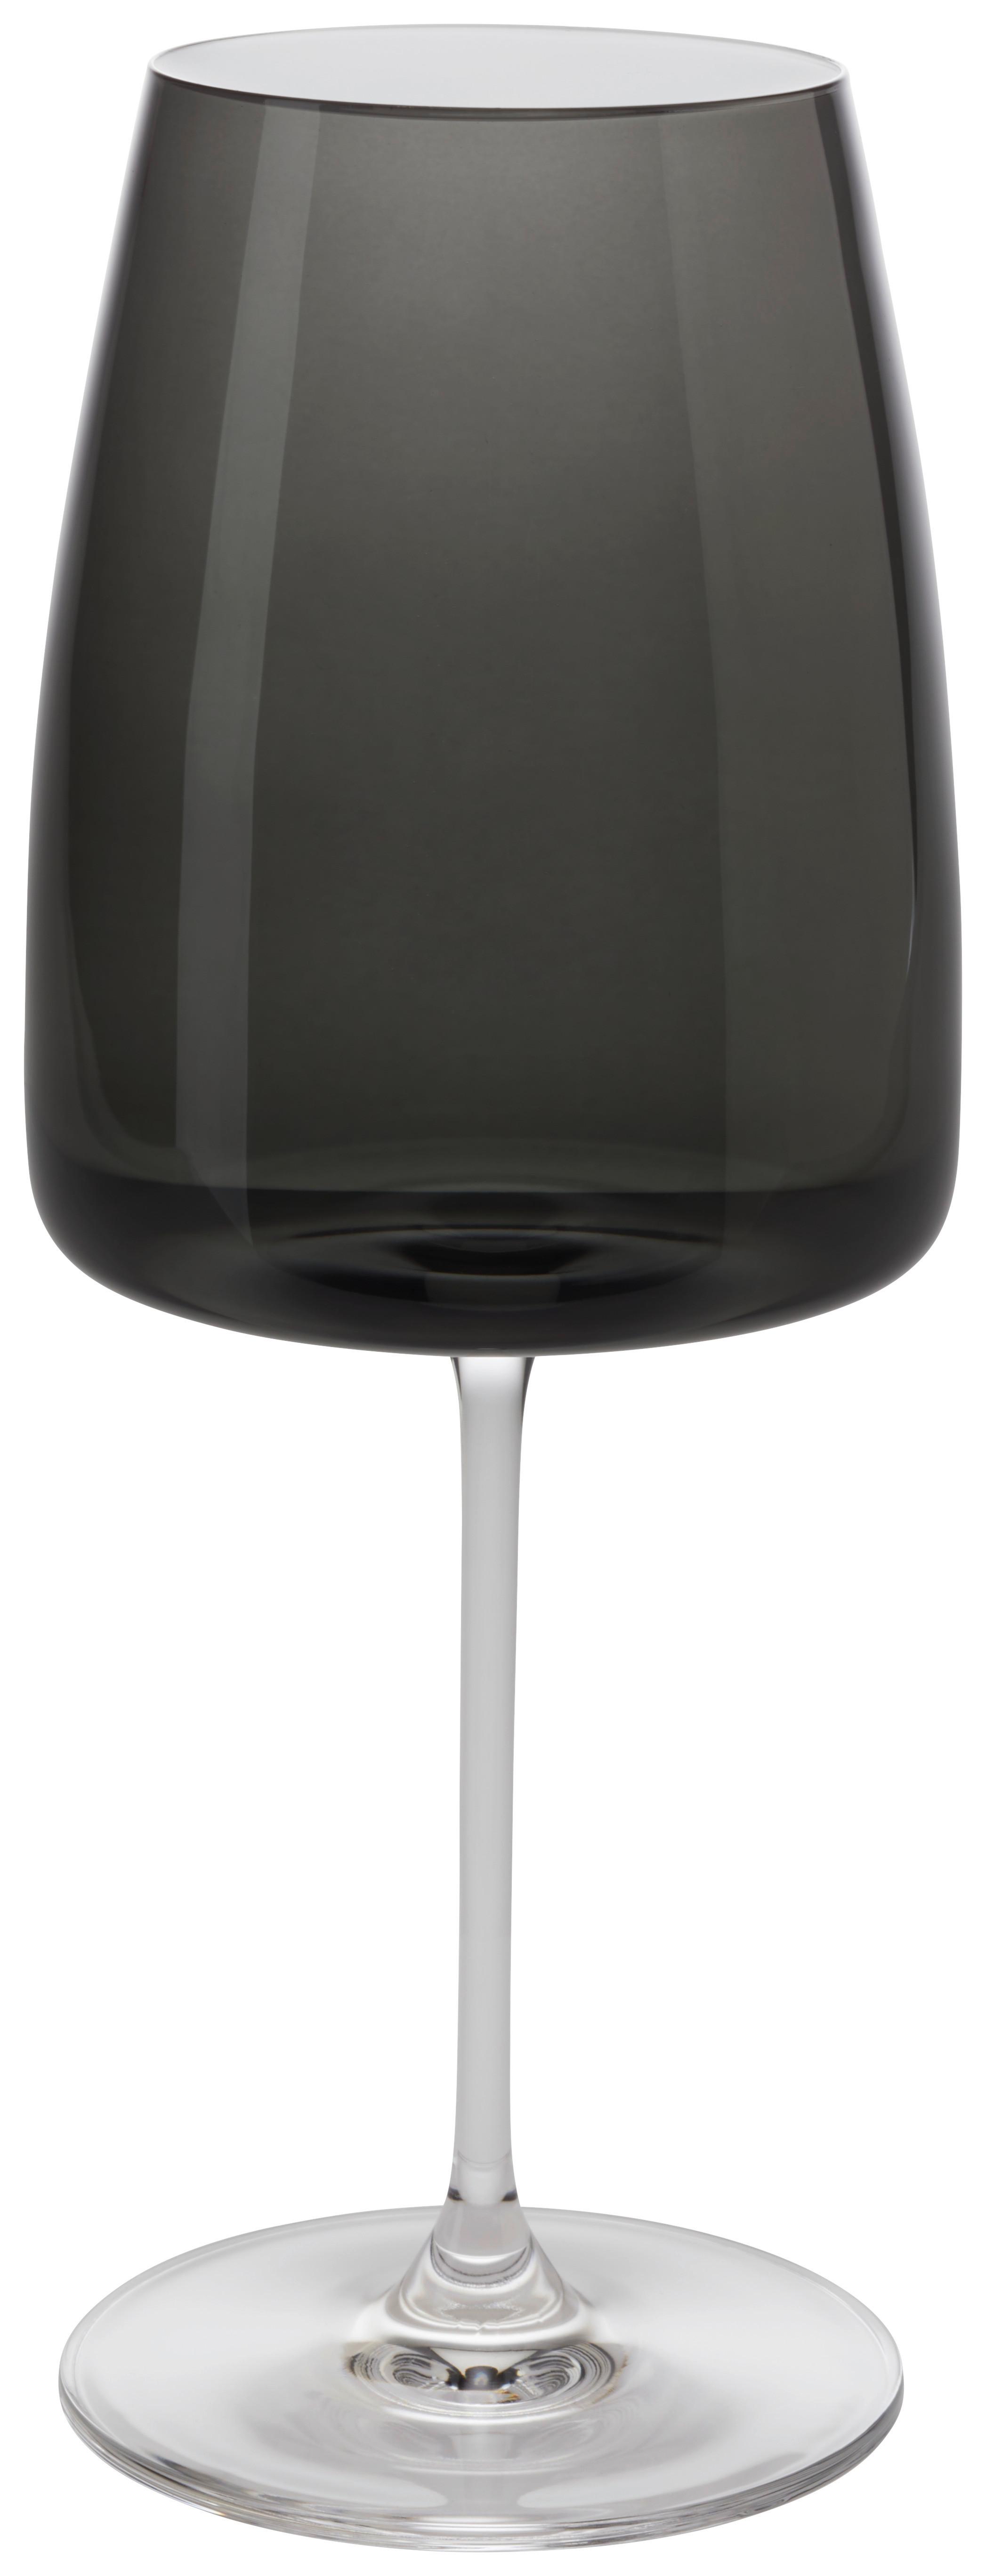 Sklenice Na Bordeaux Nicki - černá, Moderní, sklo (9,4/24cm) - Premium Living